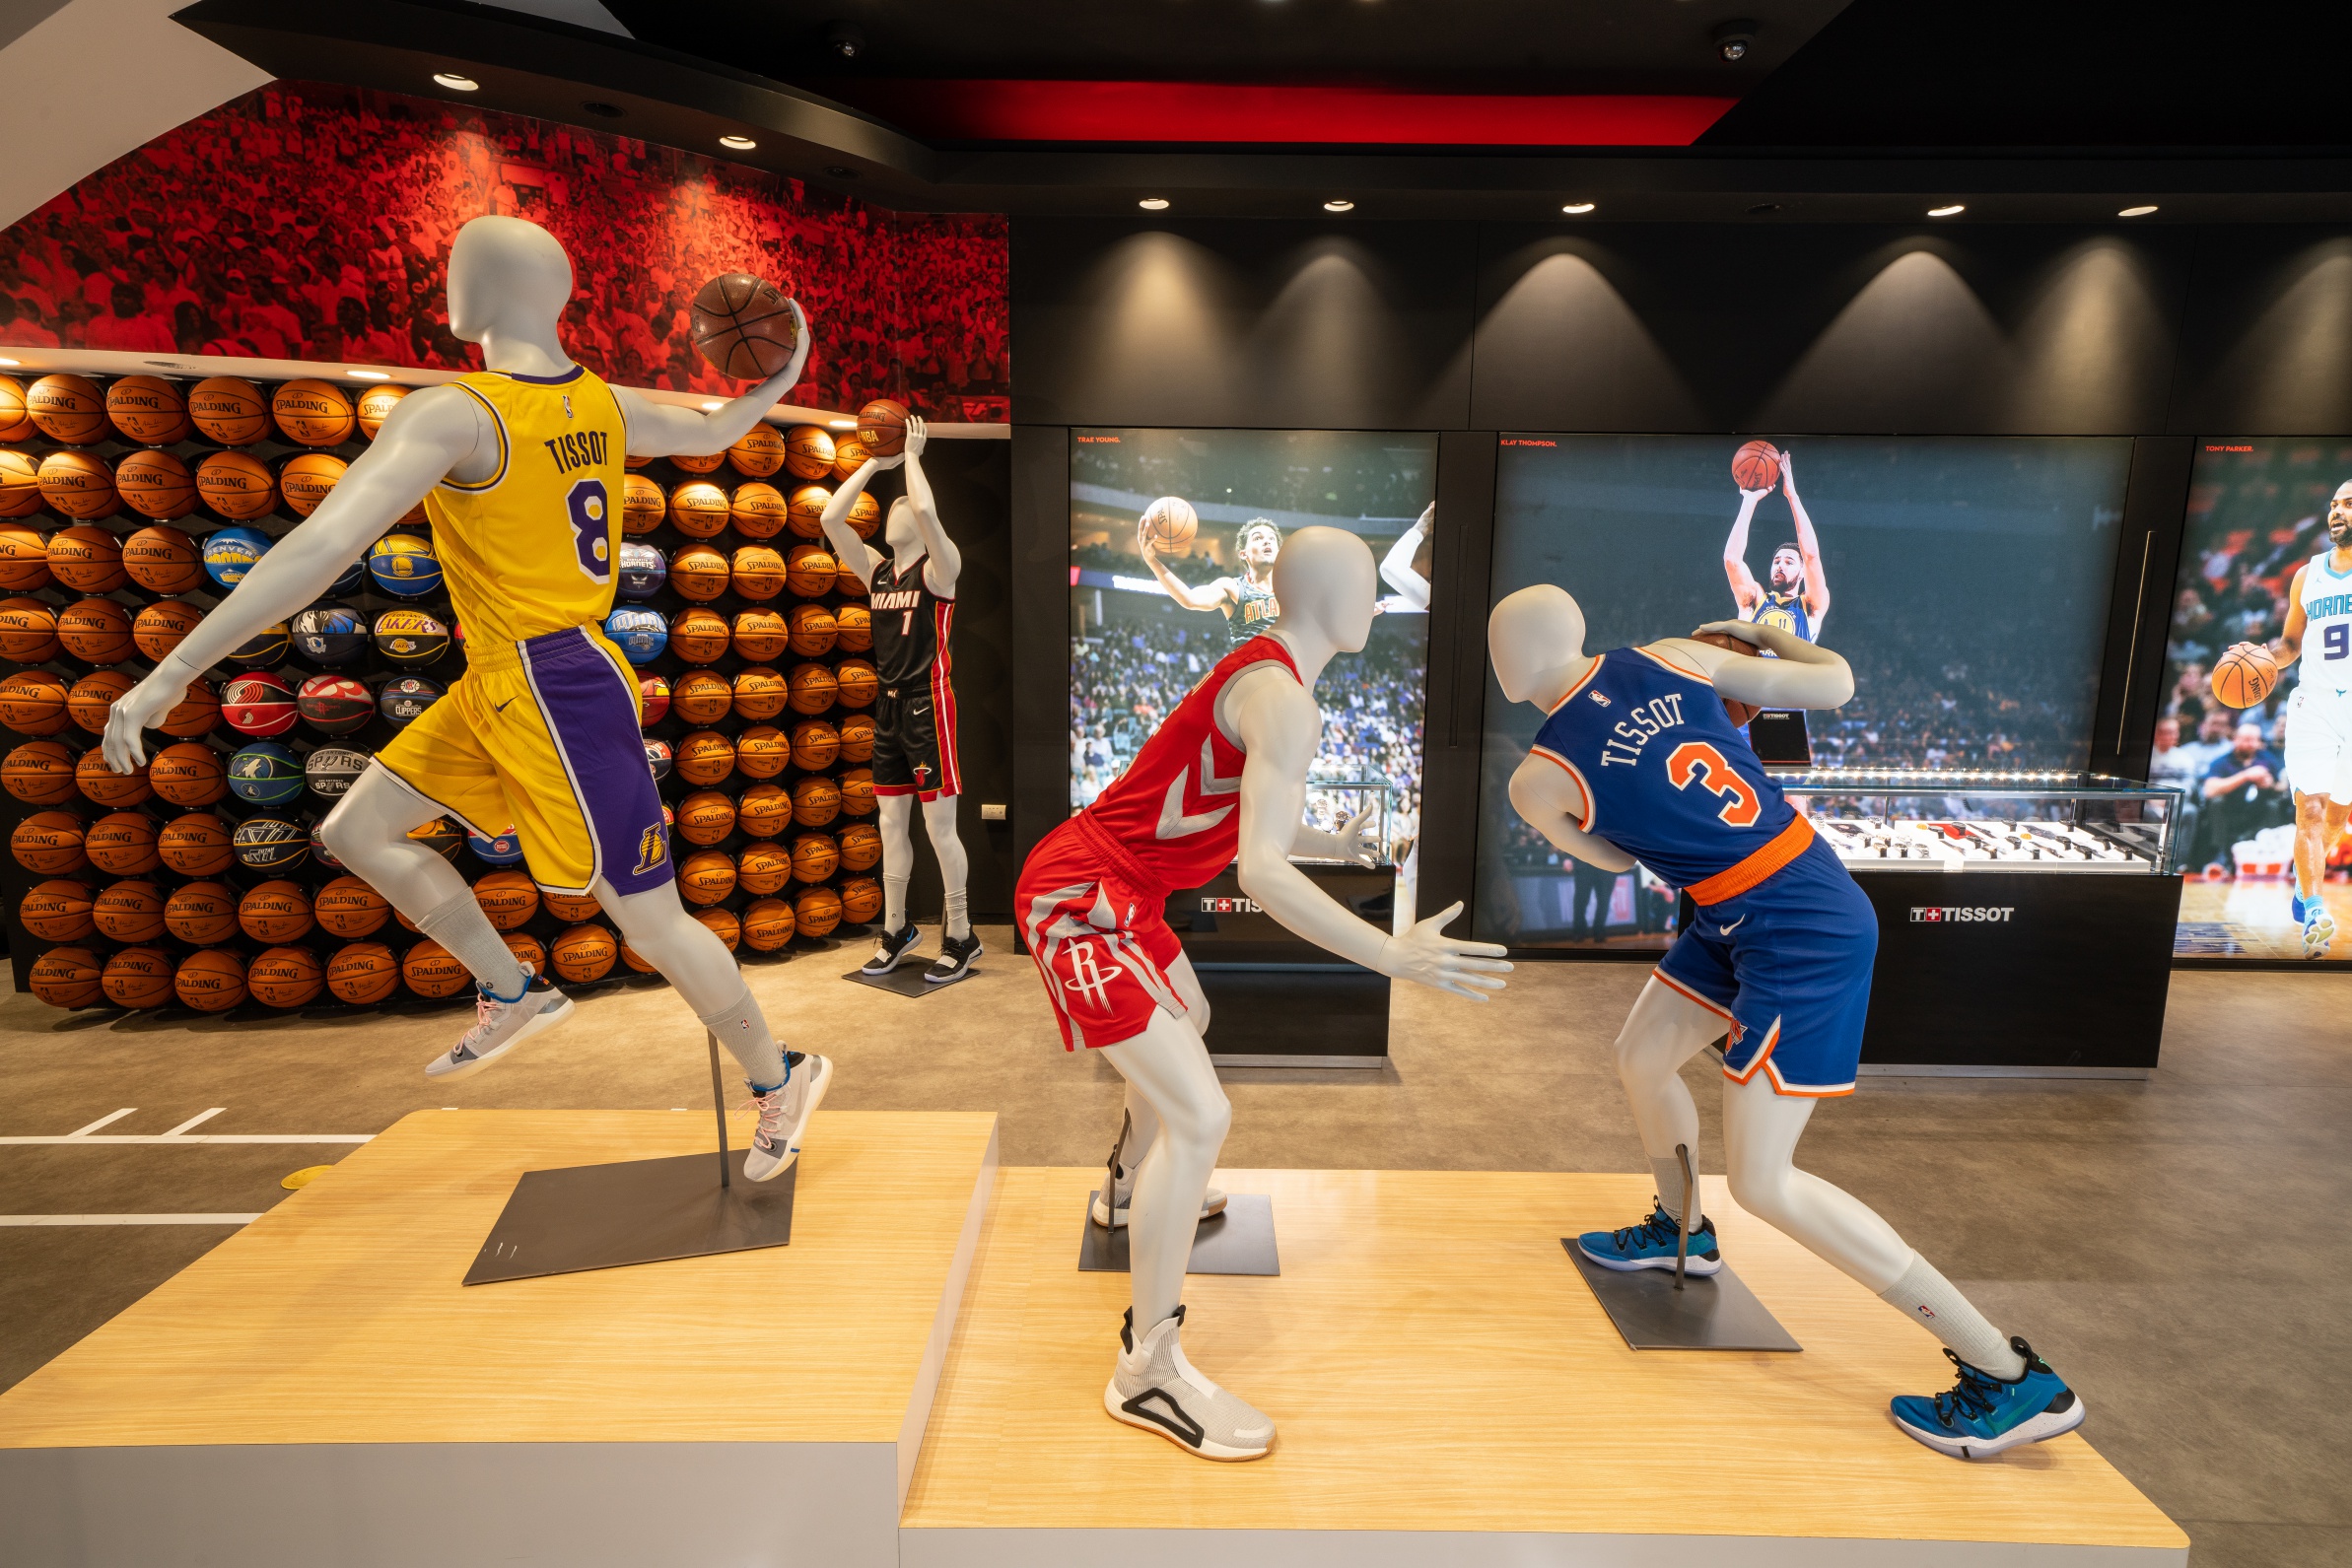 NBA Jerseys, Modell's Sporting Goods Store Interior, NYC Stock